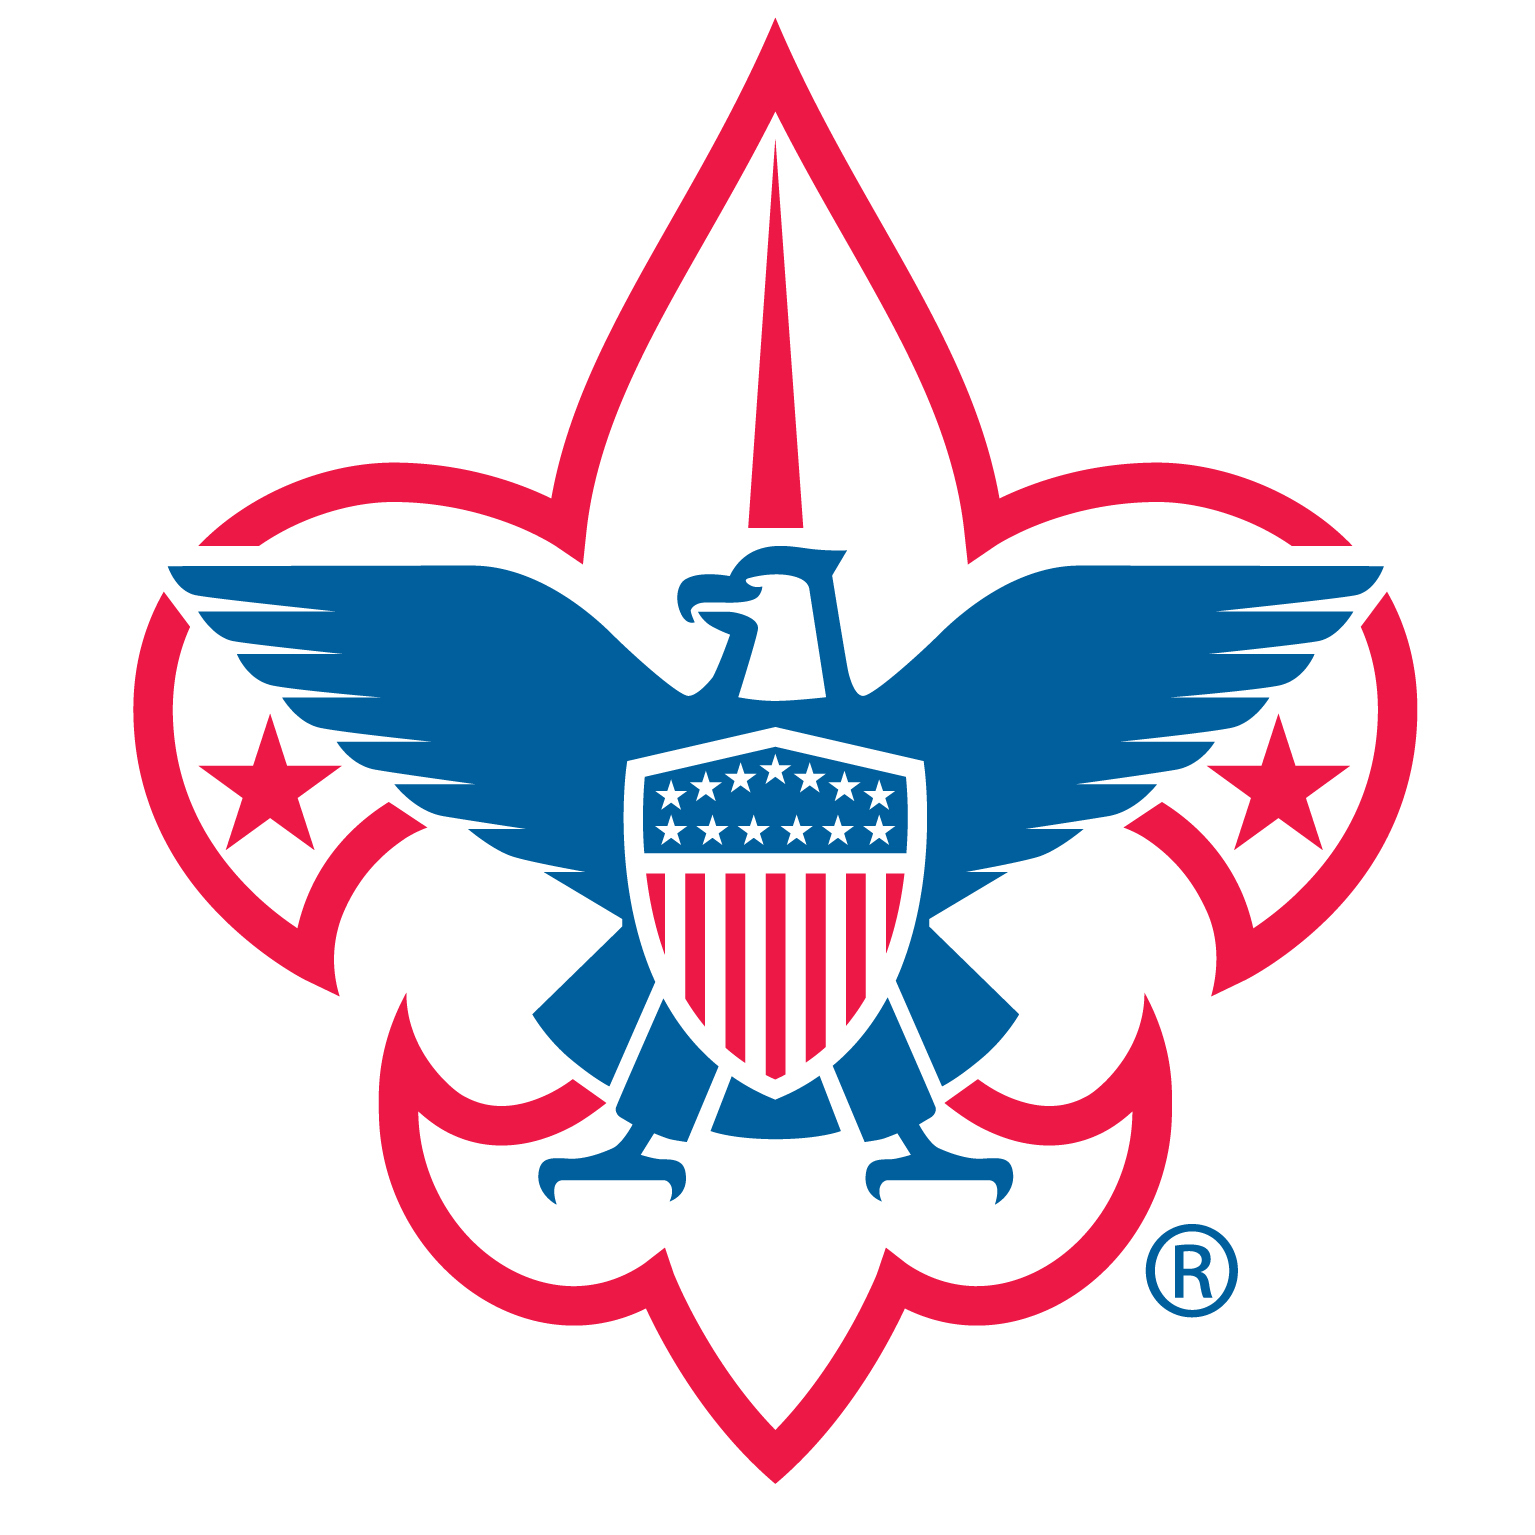 BSA Corporate - Fleur de lis Logo